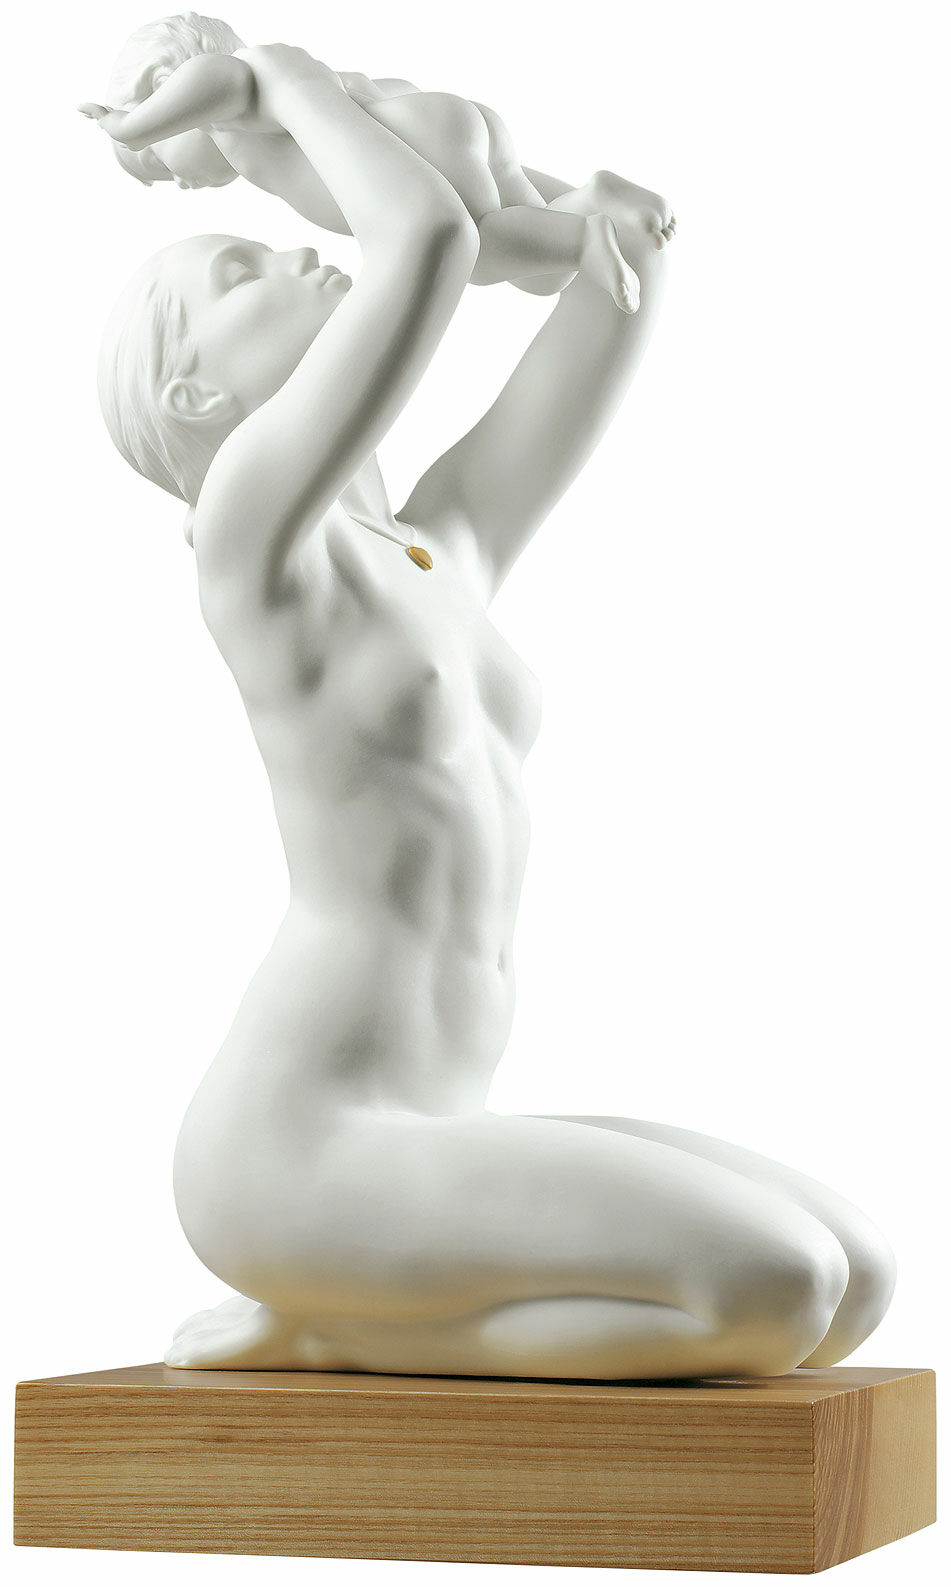 Porcelain sculpture "Beginnings" by Lladró